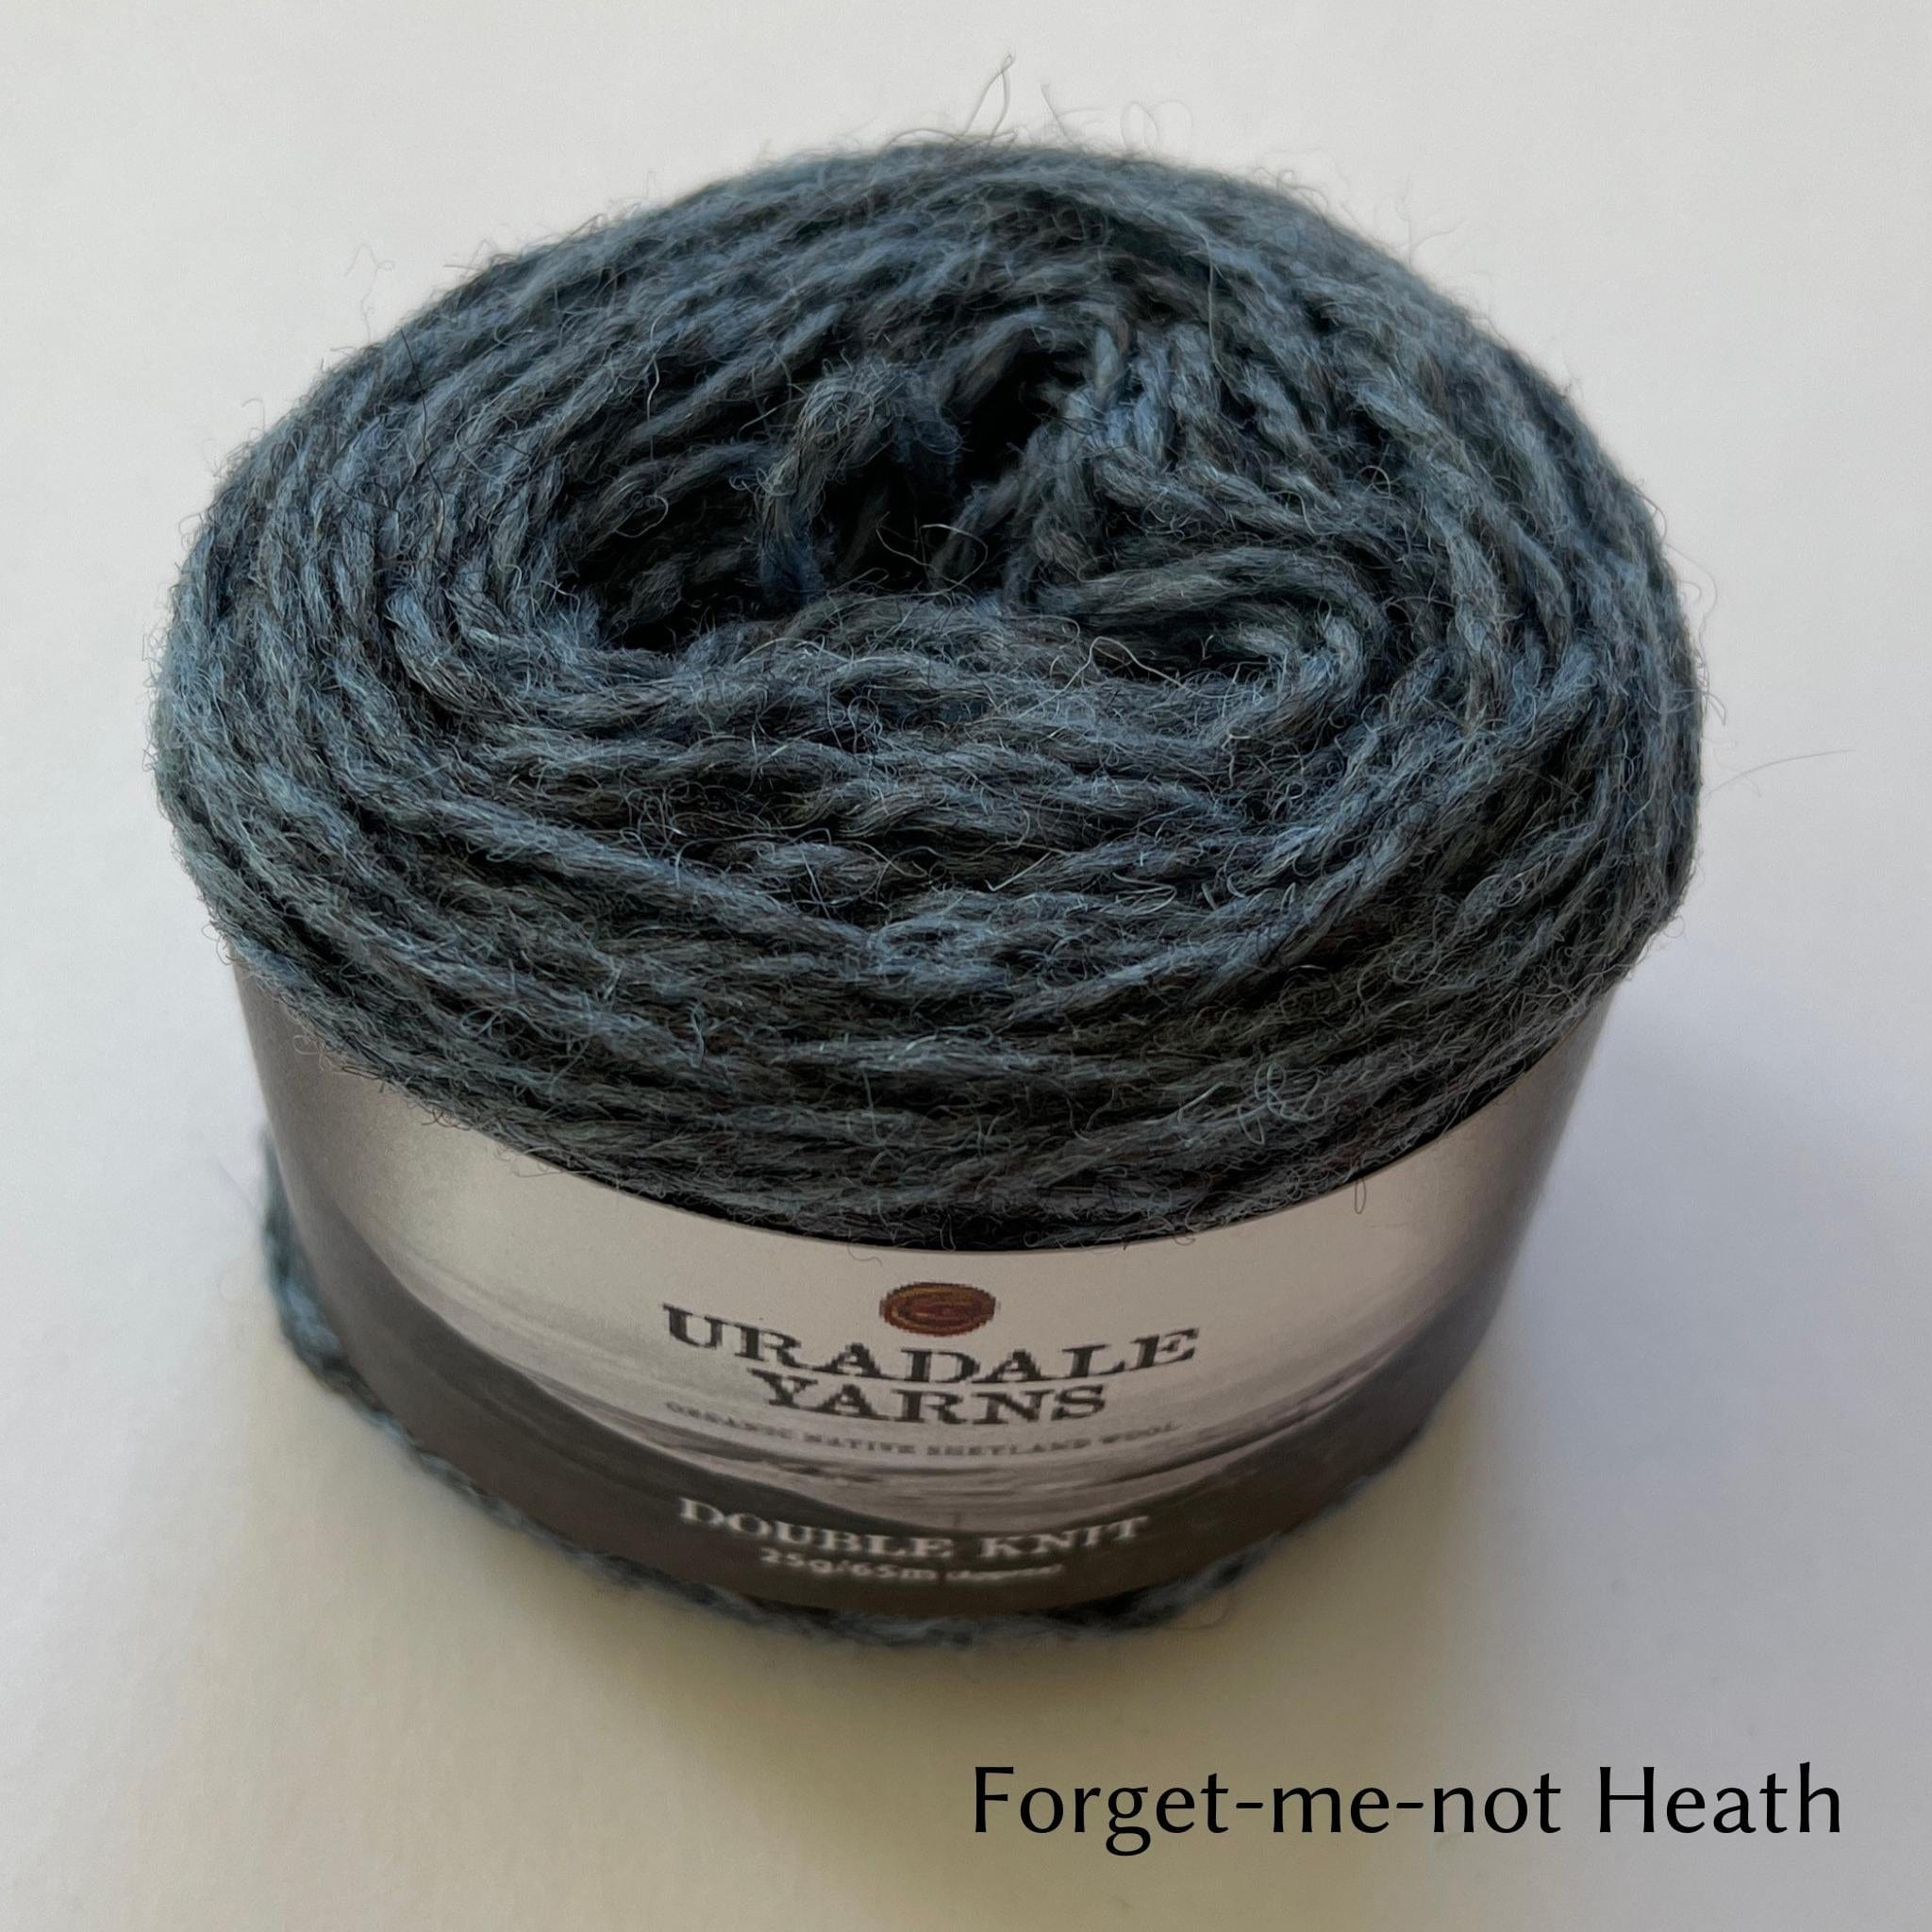 cake of Uradale yarn in color Forget-me-not Heath- heathered blue